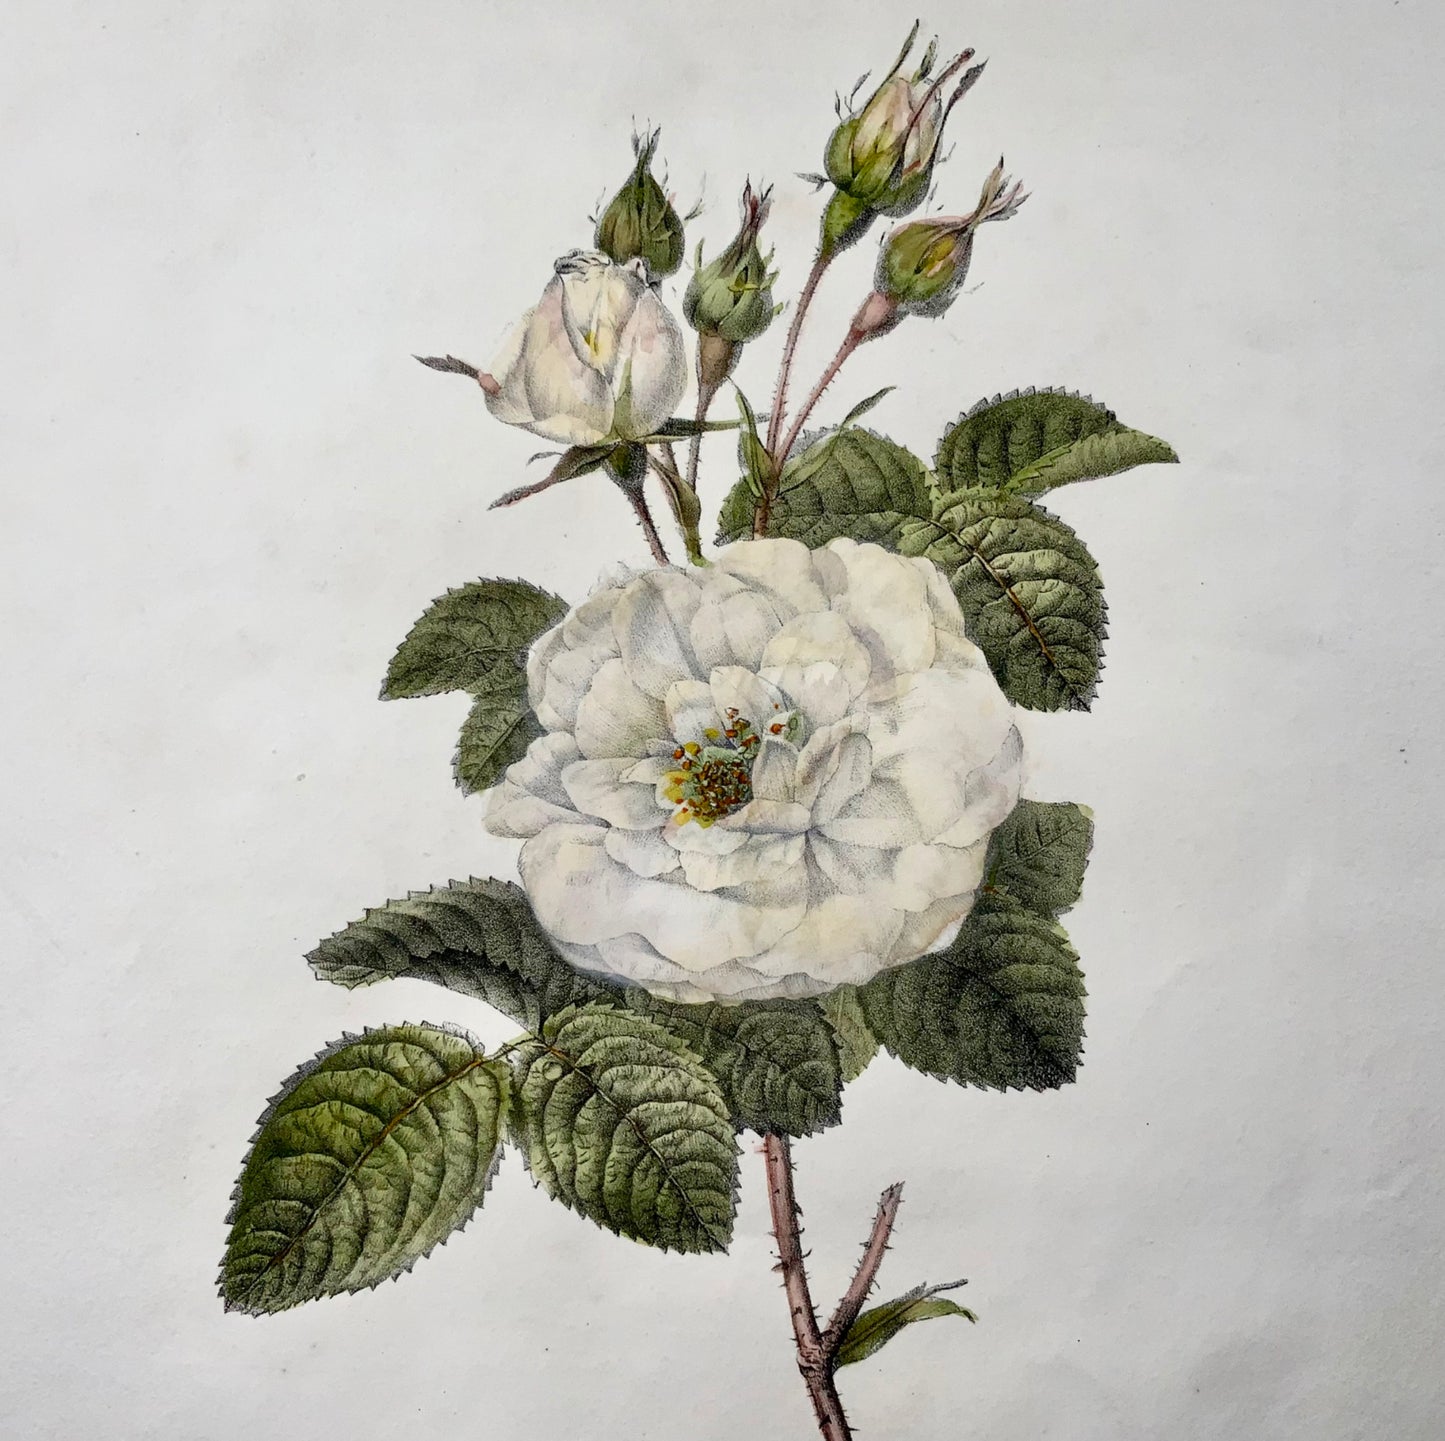 1820 c Rosa Bianca, litografia in pietra in folio di Burggraaf con colori a mano, botanica